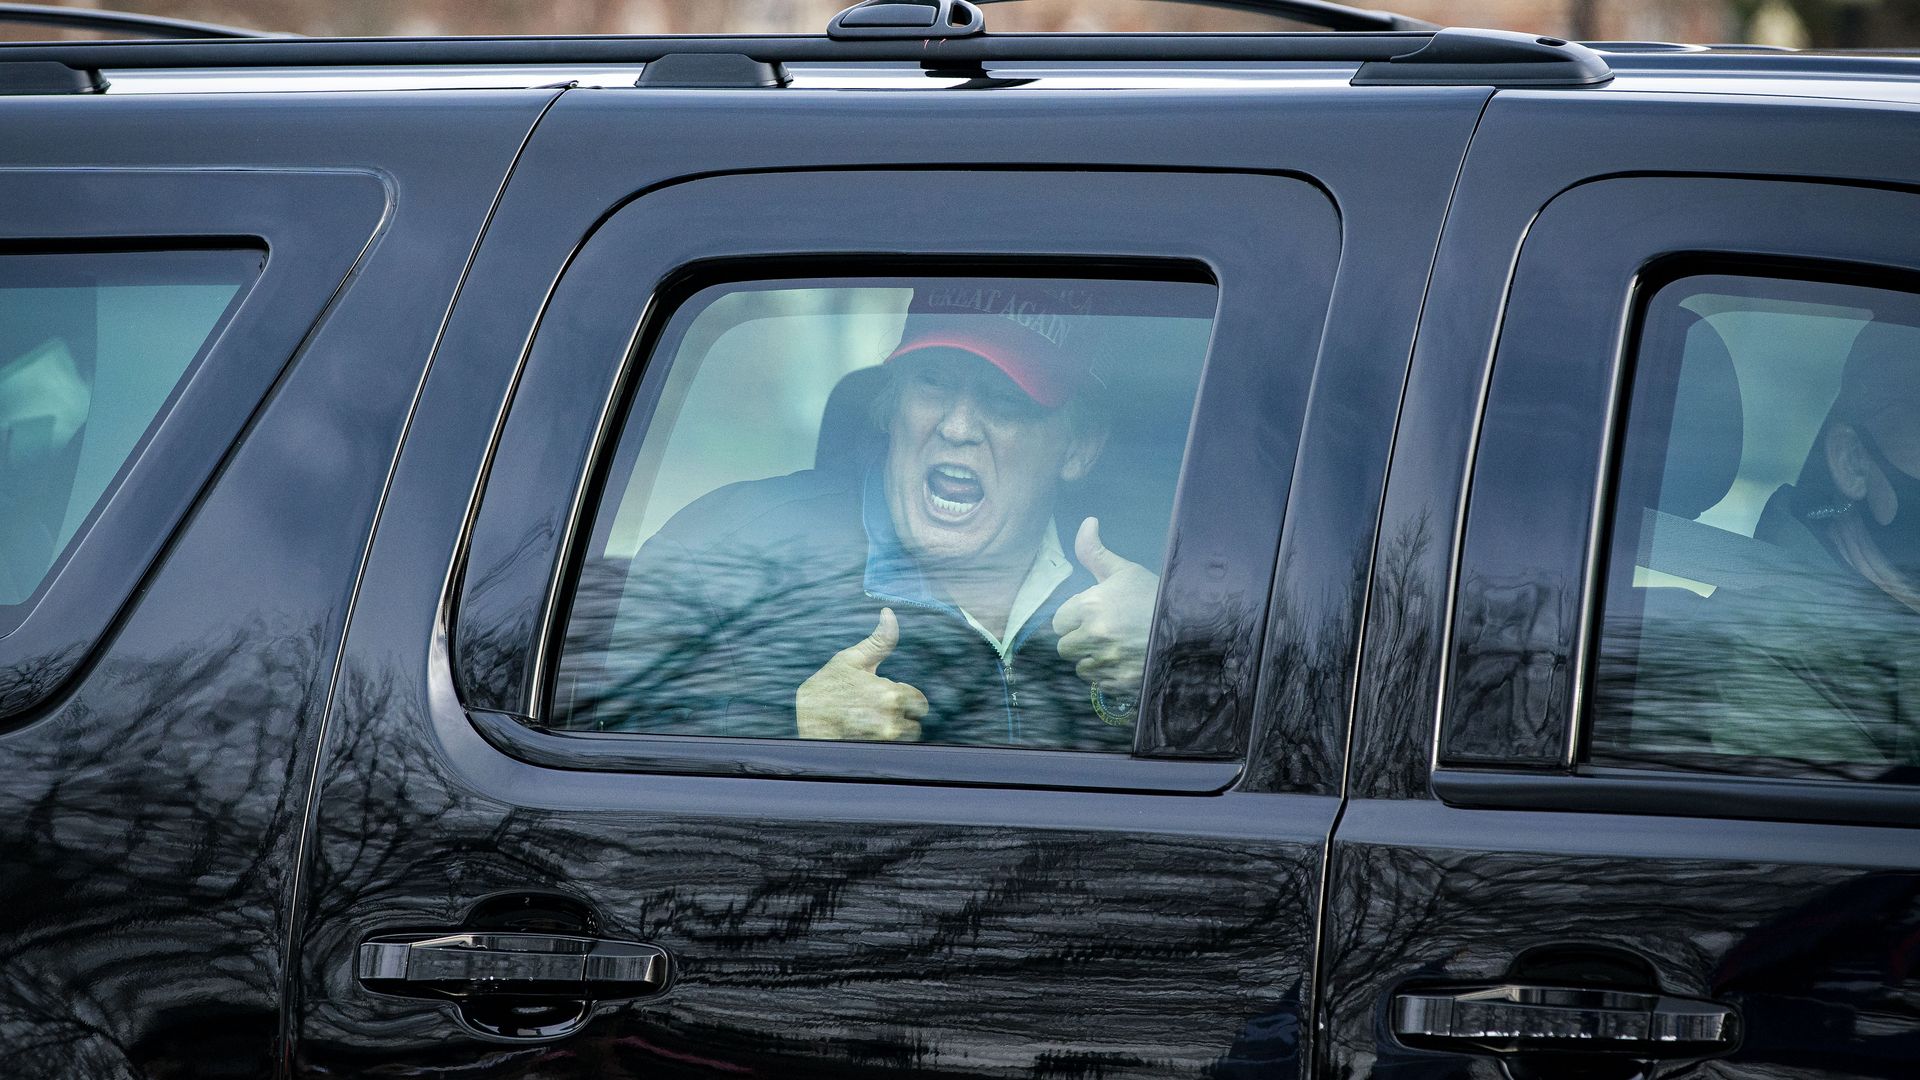 Trump gives a thumbs up through a car window